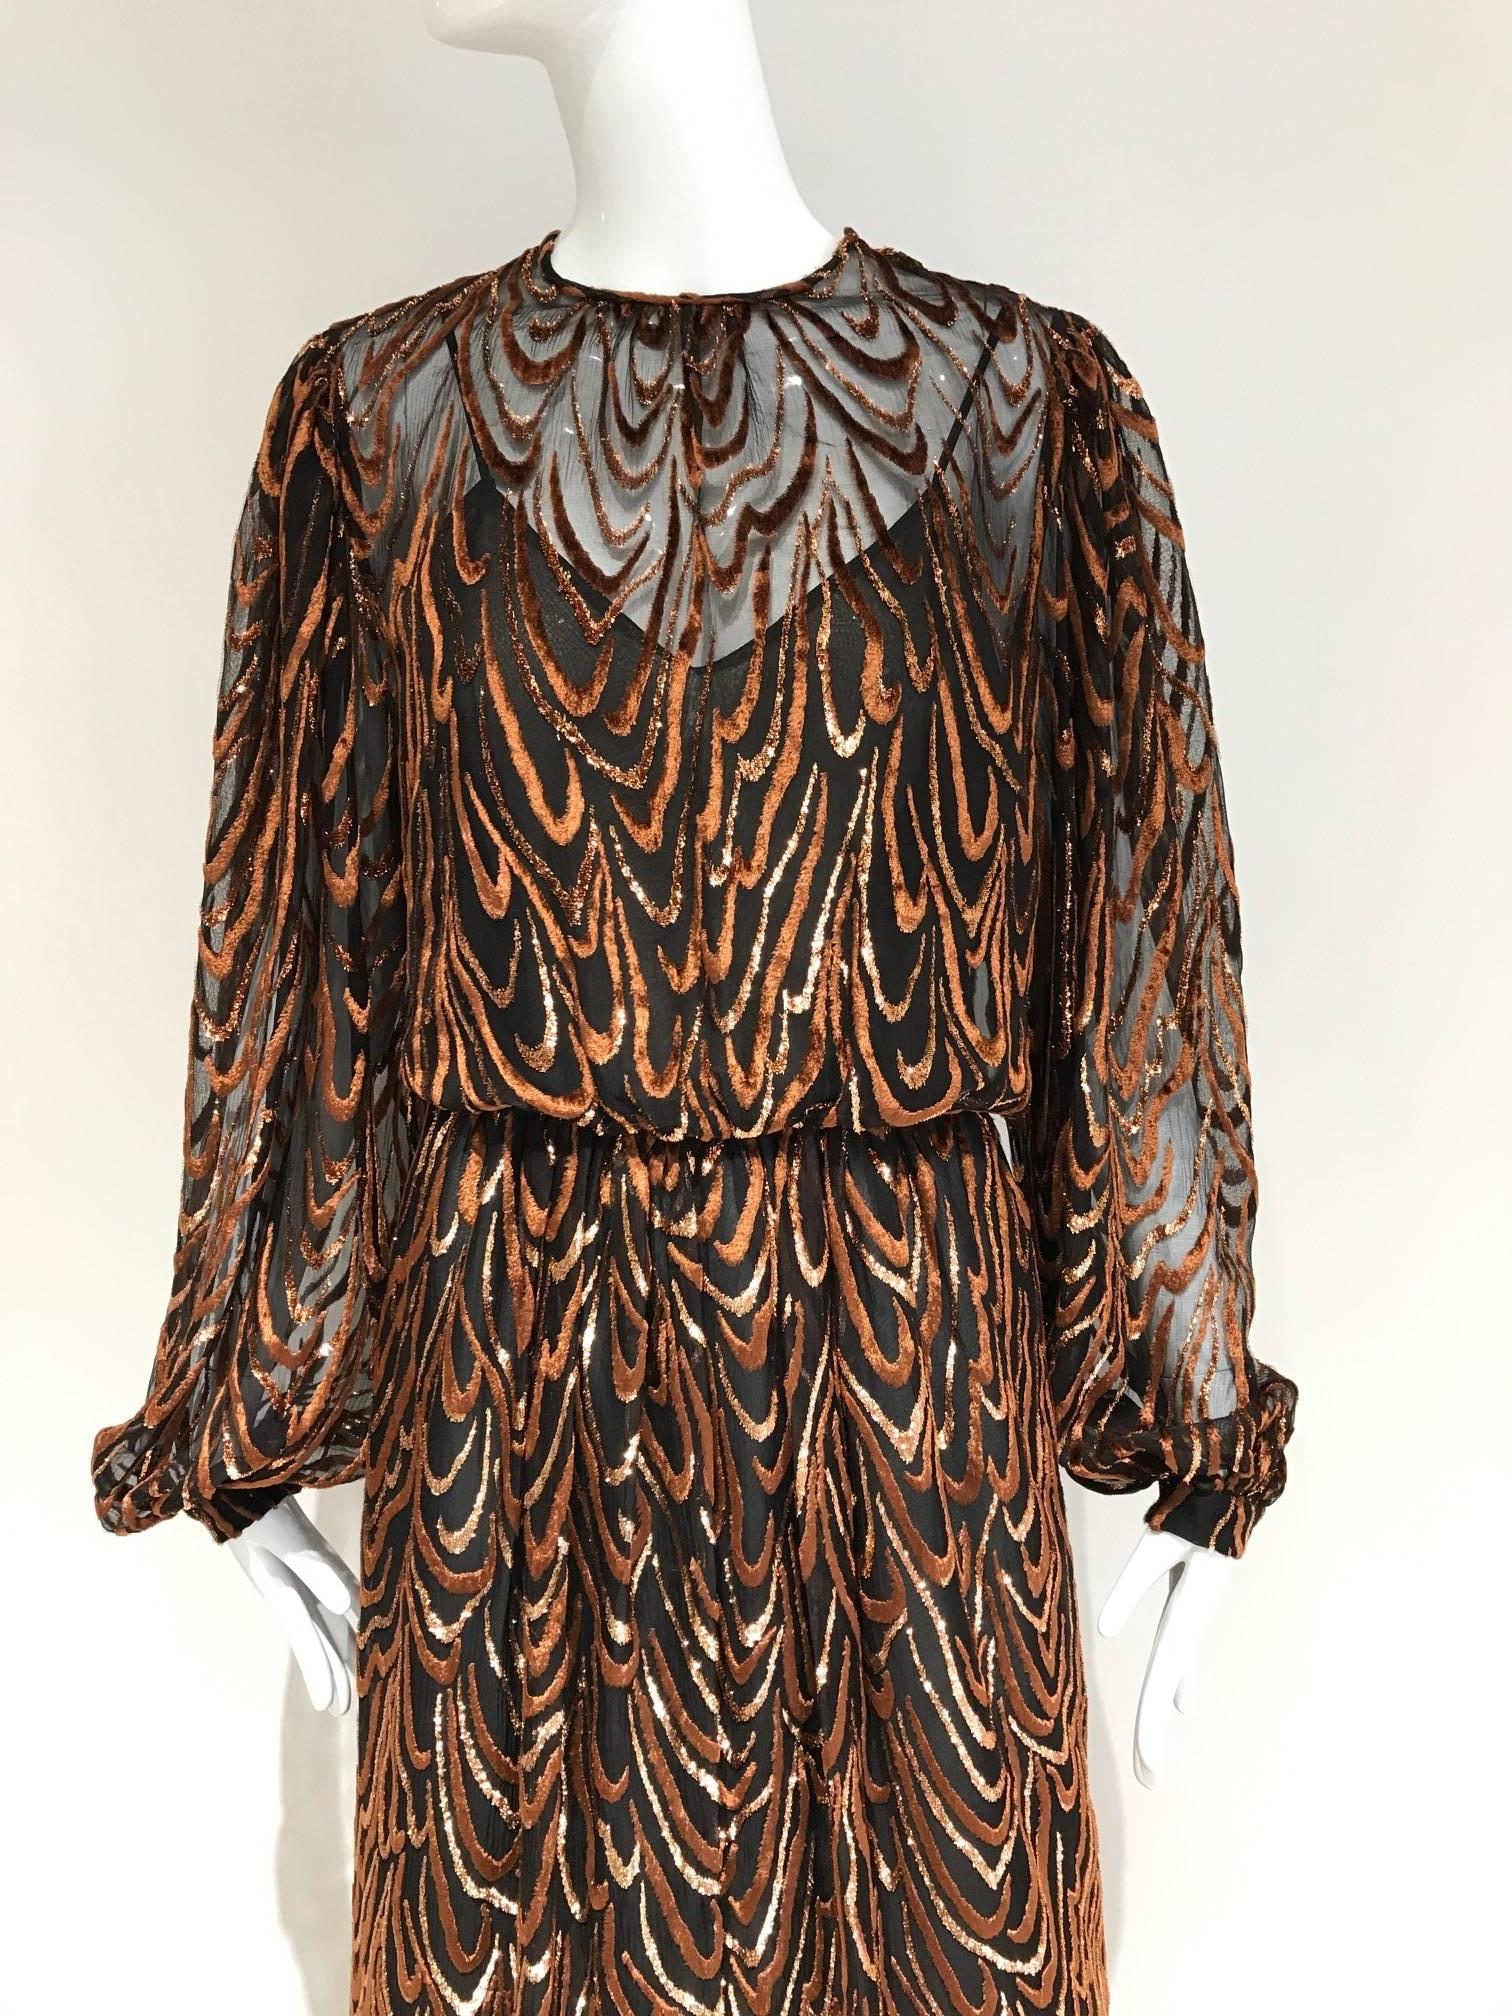 Vintage 1980s Oscar De La renta brown and metallic silk velvet devoré maxi dress. 
Size medium